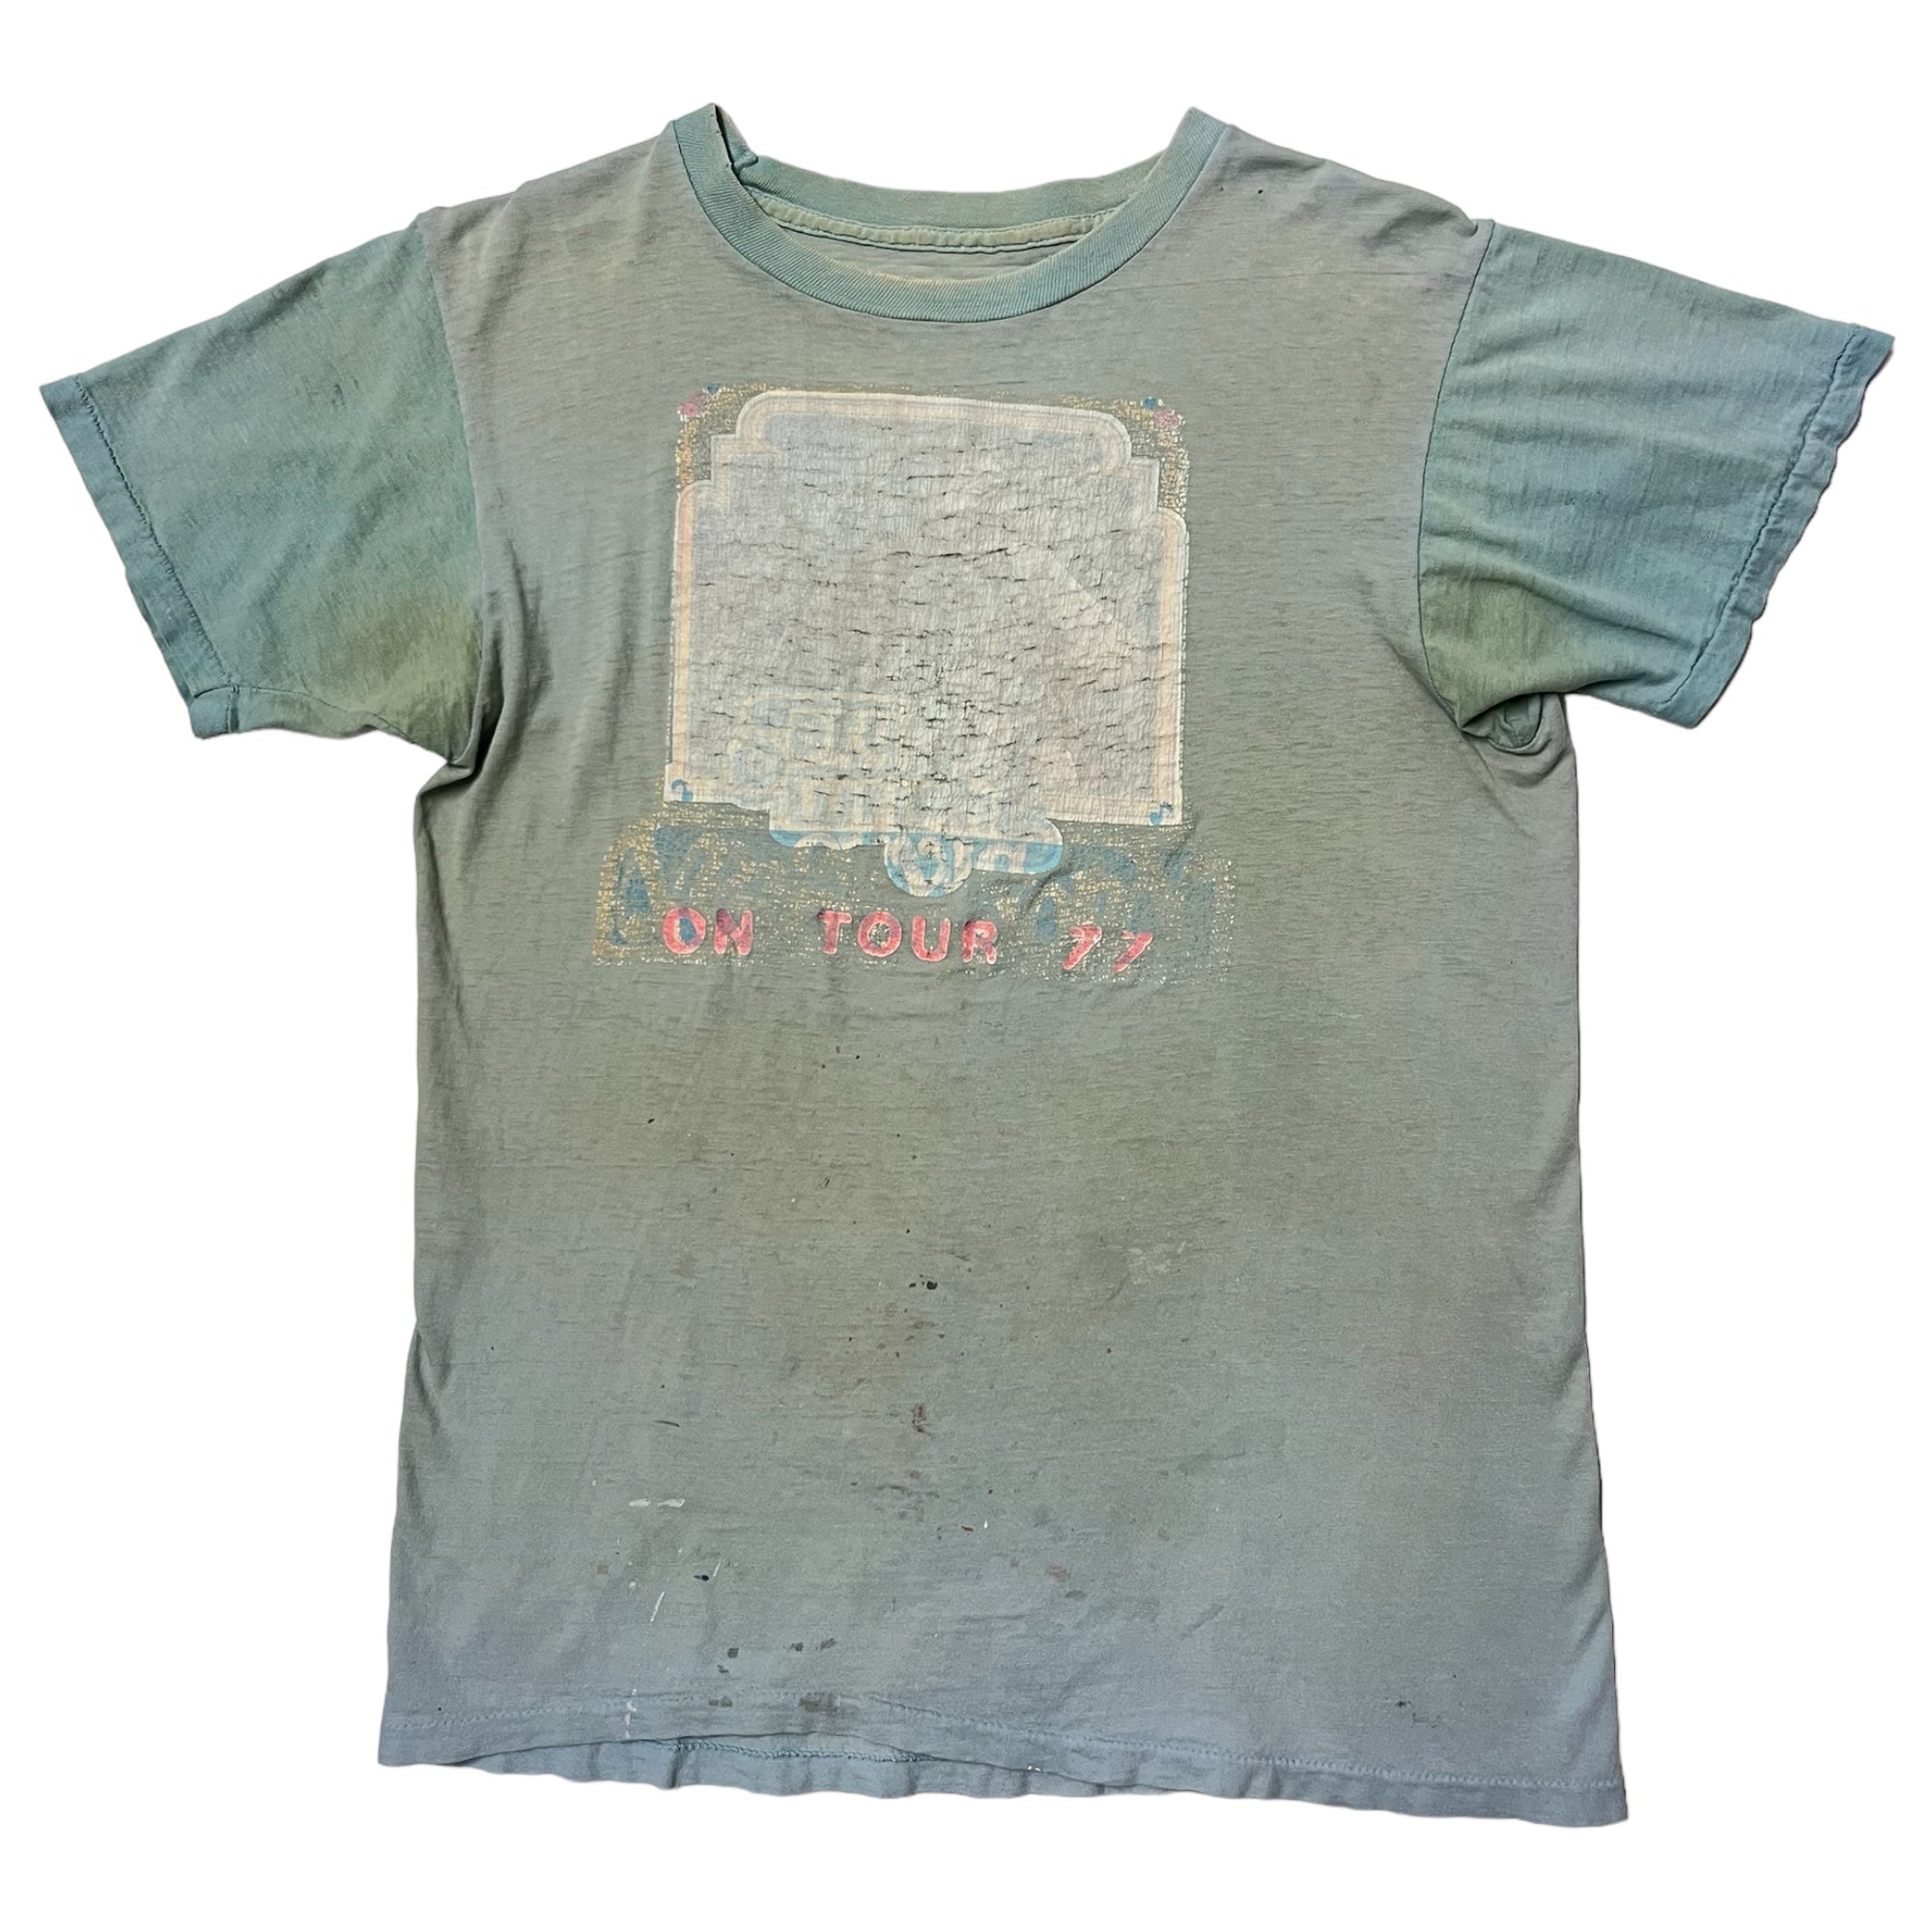 1977 Two-Tone Distressed Tour T-Shirt - Shades of Sea Foam Green/Blue - M/L